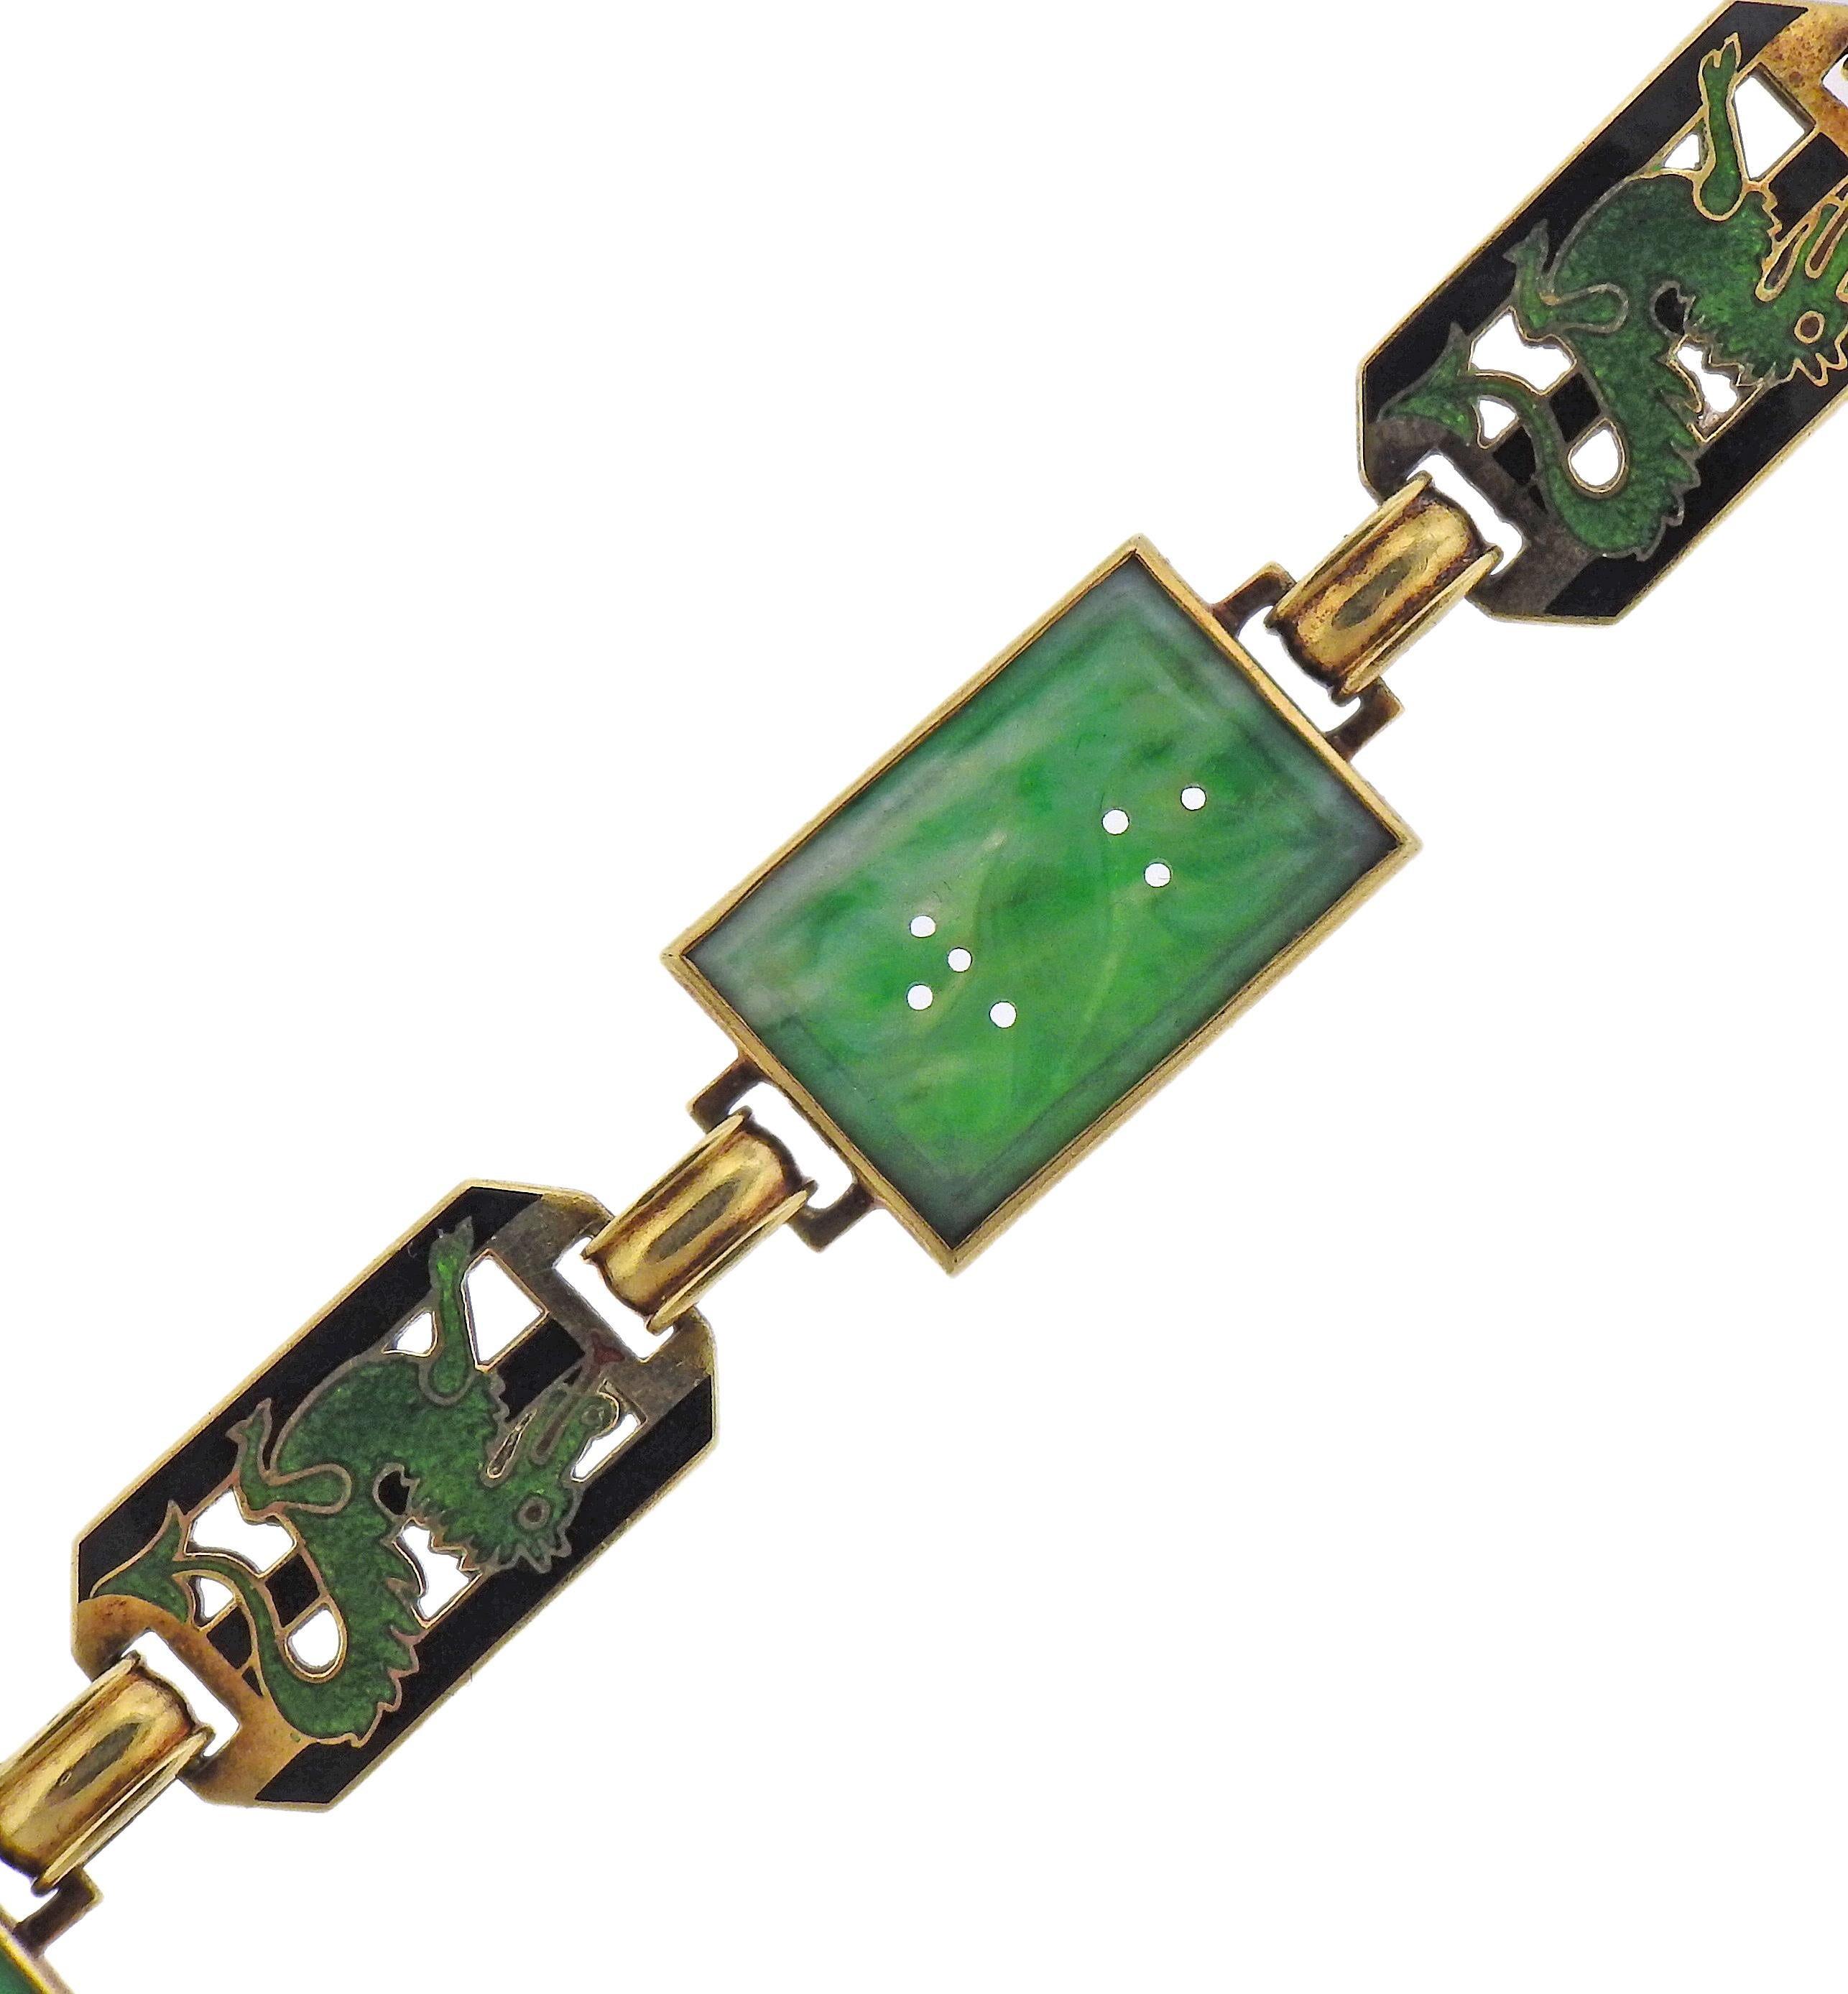 14k gold bracelet, featuring three carved jade elements and enamel dragon links. Bracelet is 7.5